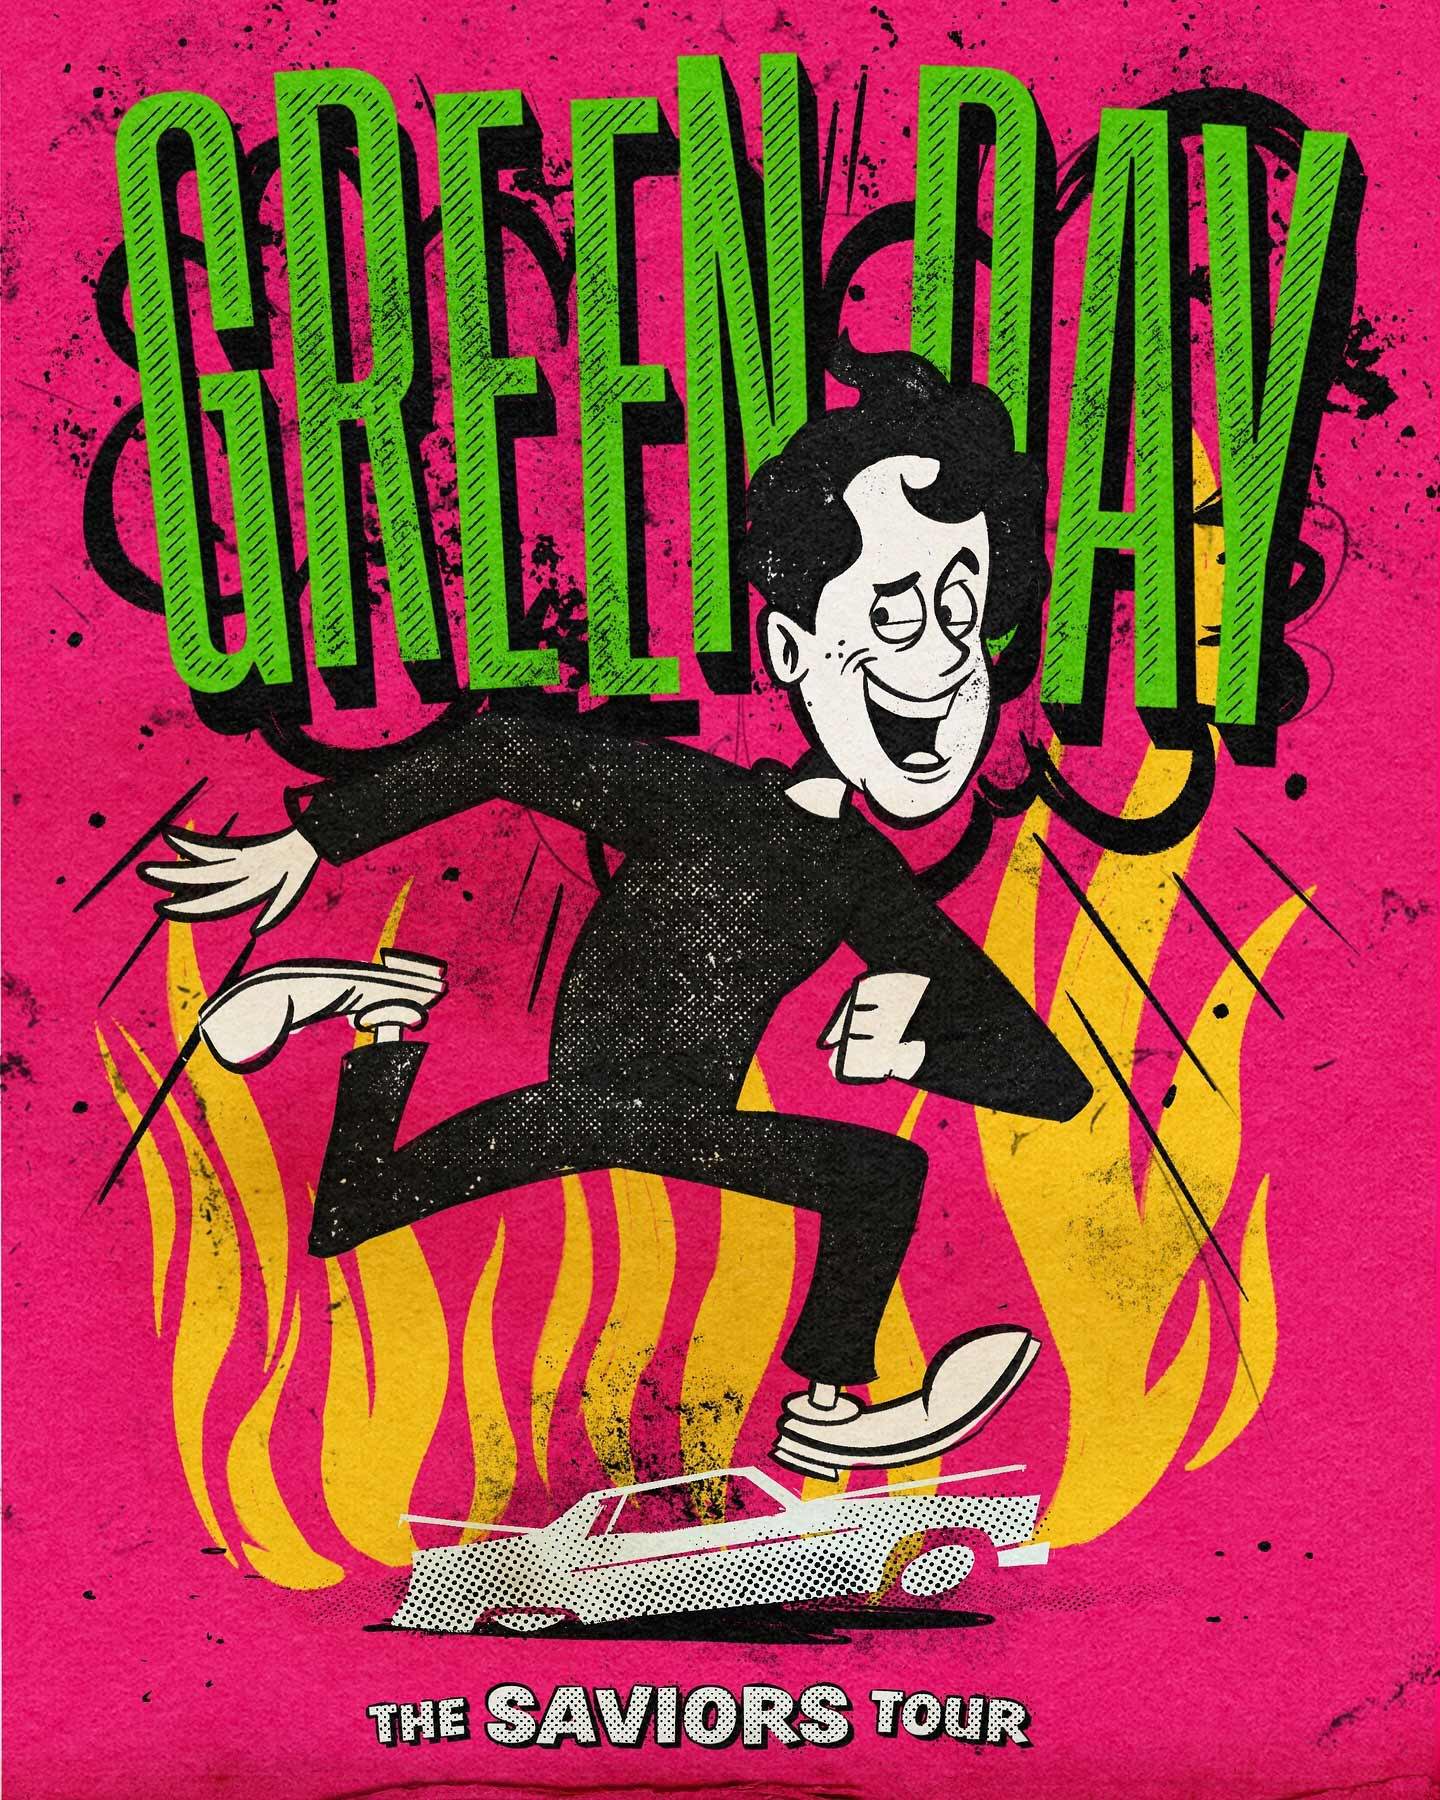 Ed Vill - Green Day Poster